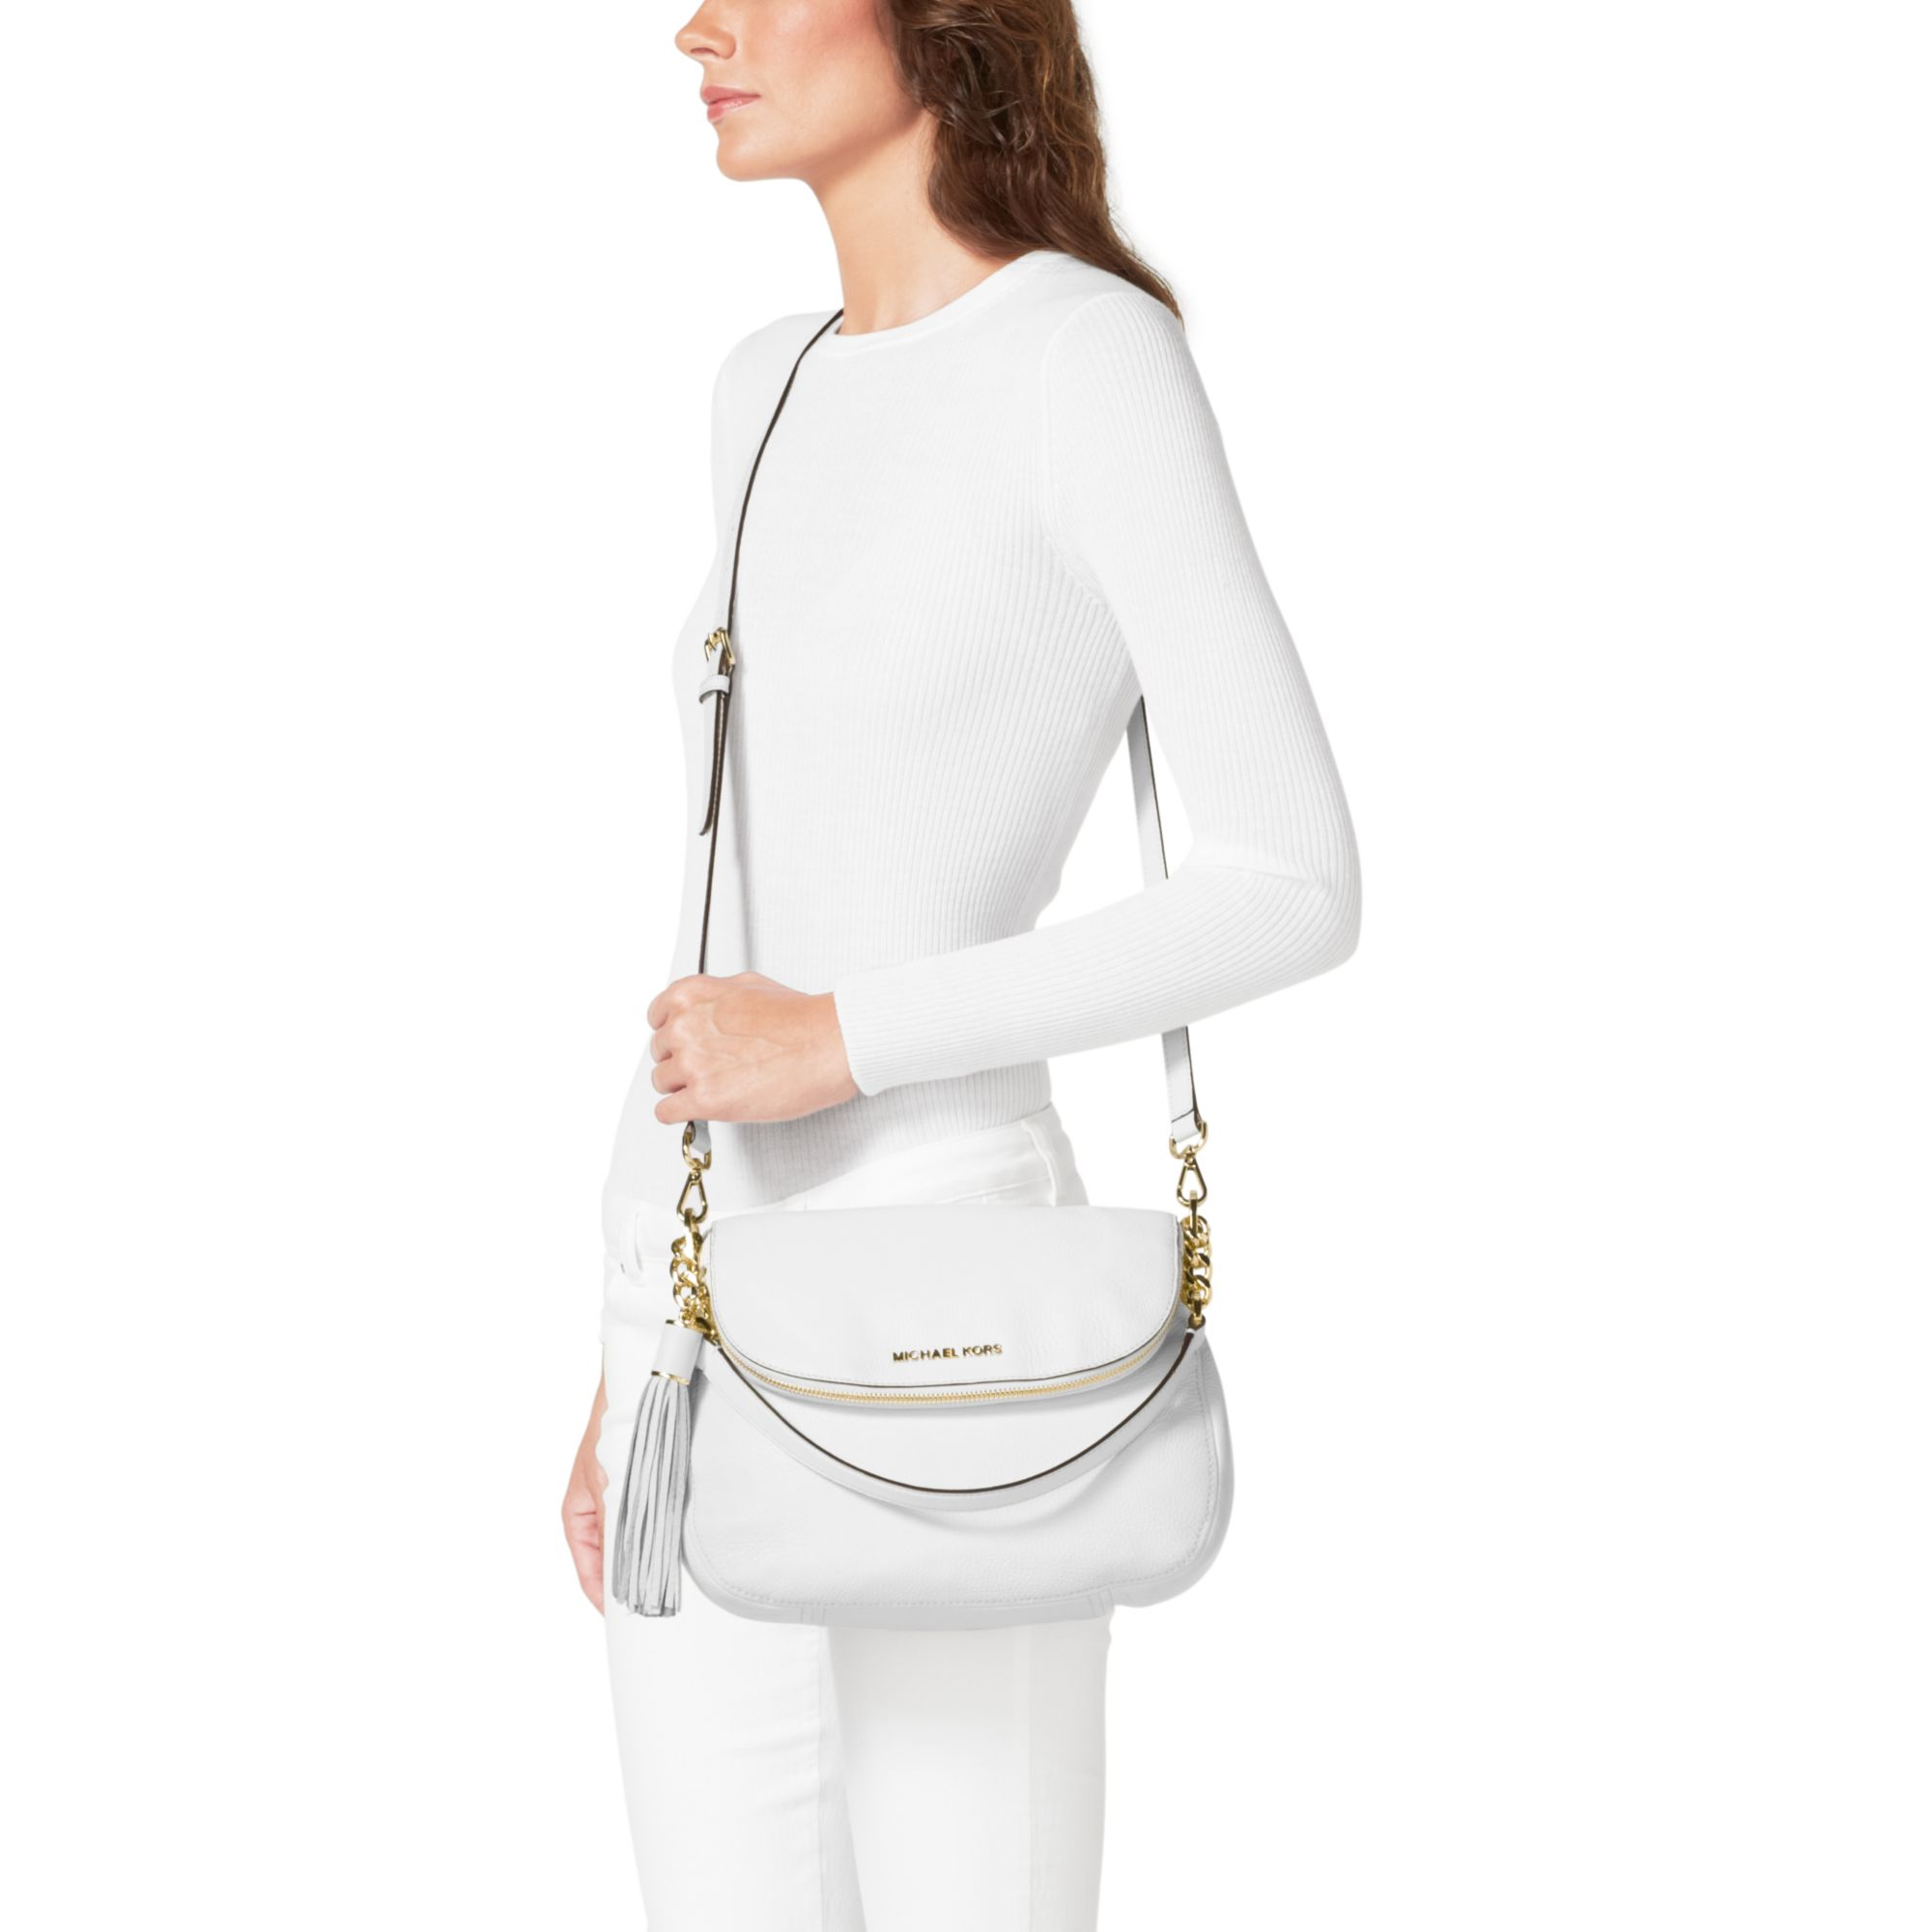 Lyst - Michael Kors Bedford Tassle Medium Leather Shoulder Bag in White